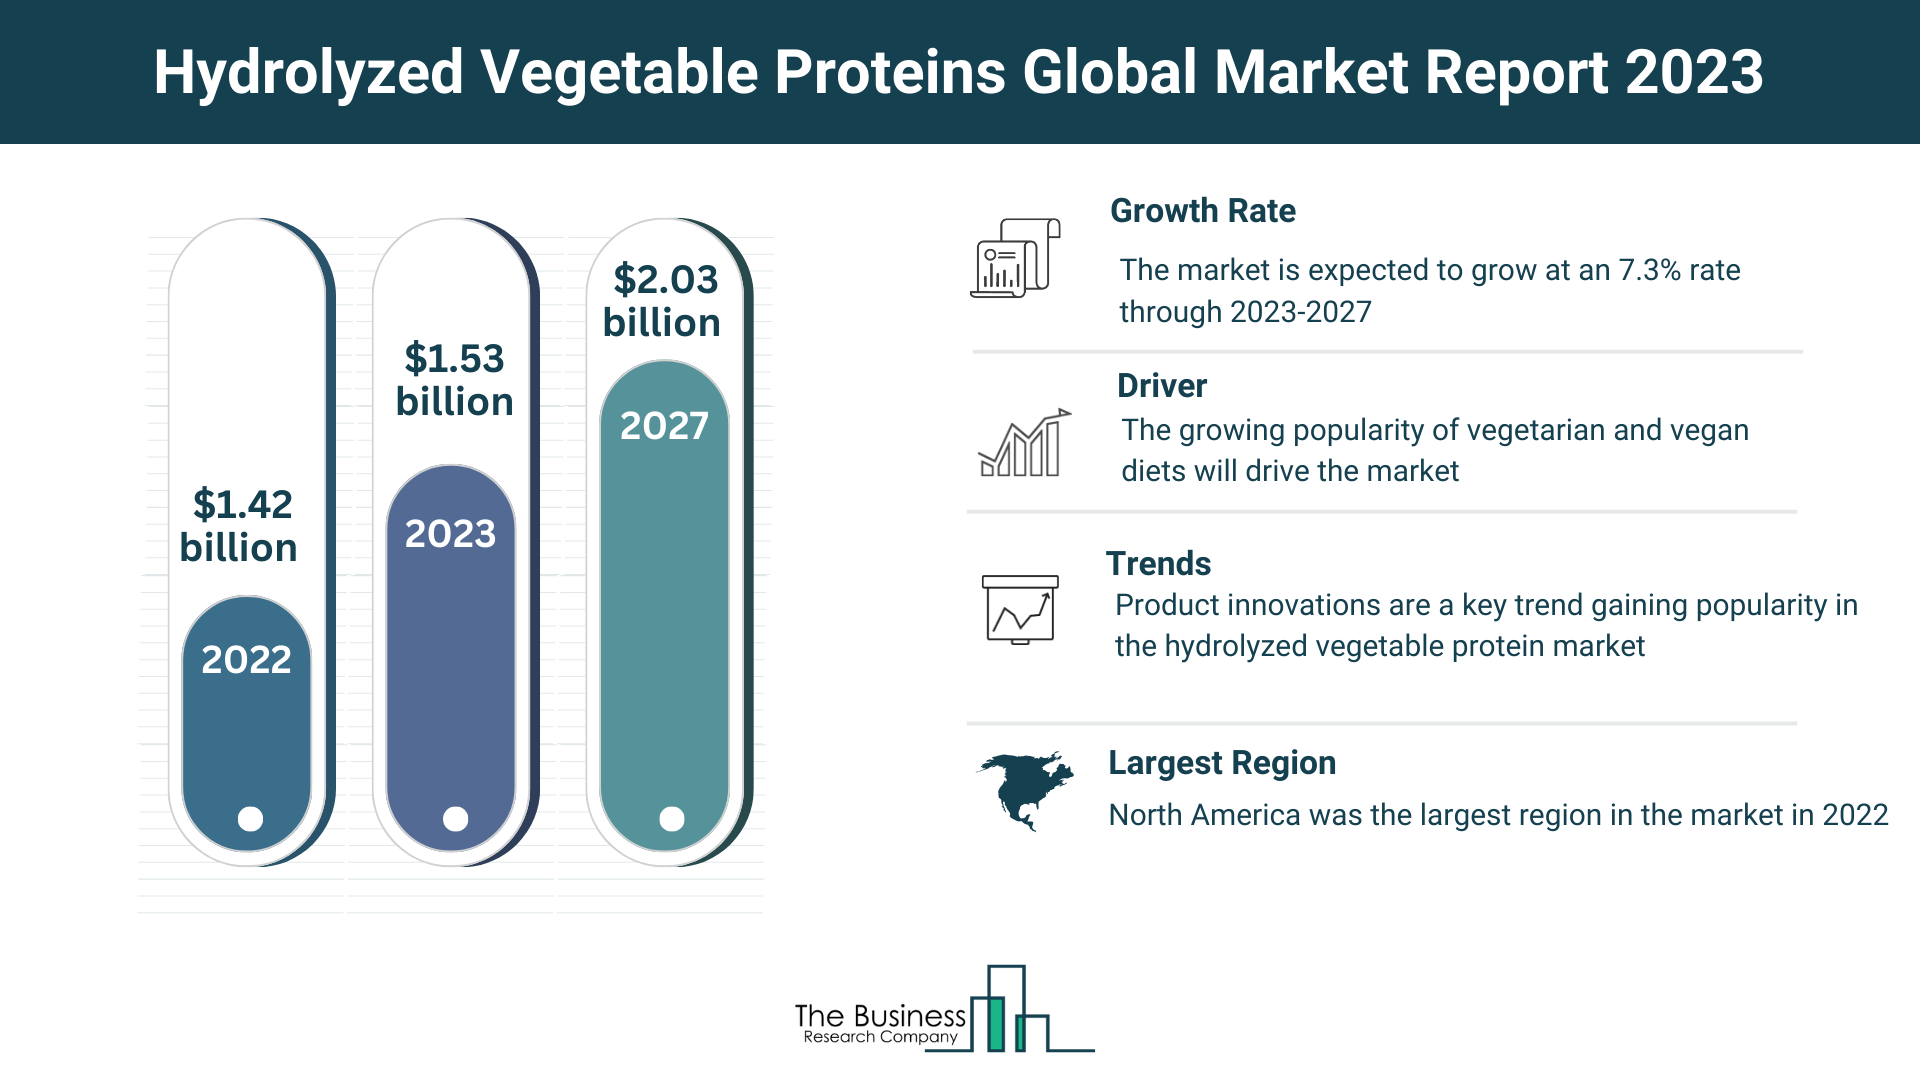 Global Hydrolyzed Vegetable Proteins Market